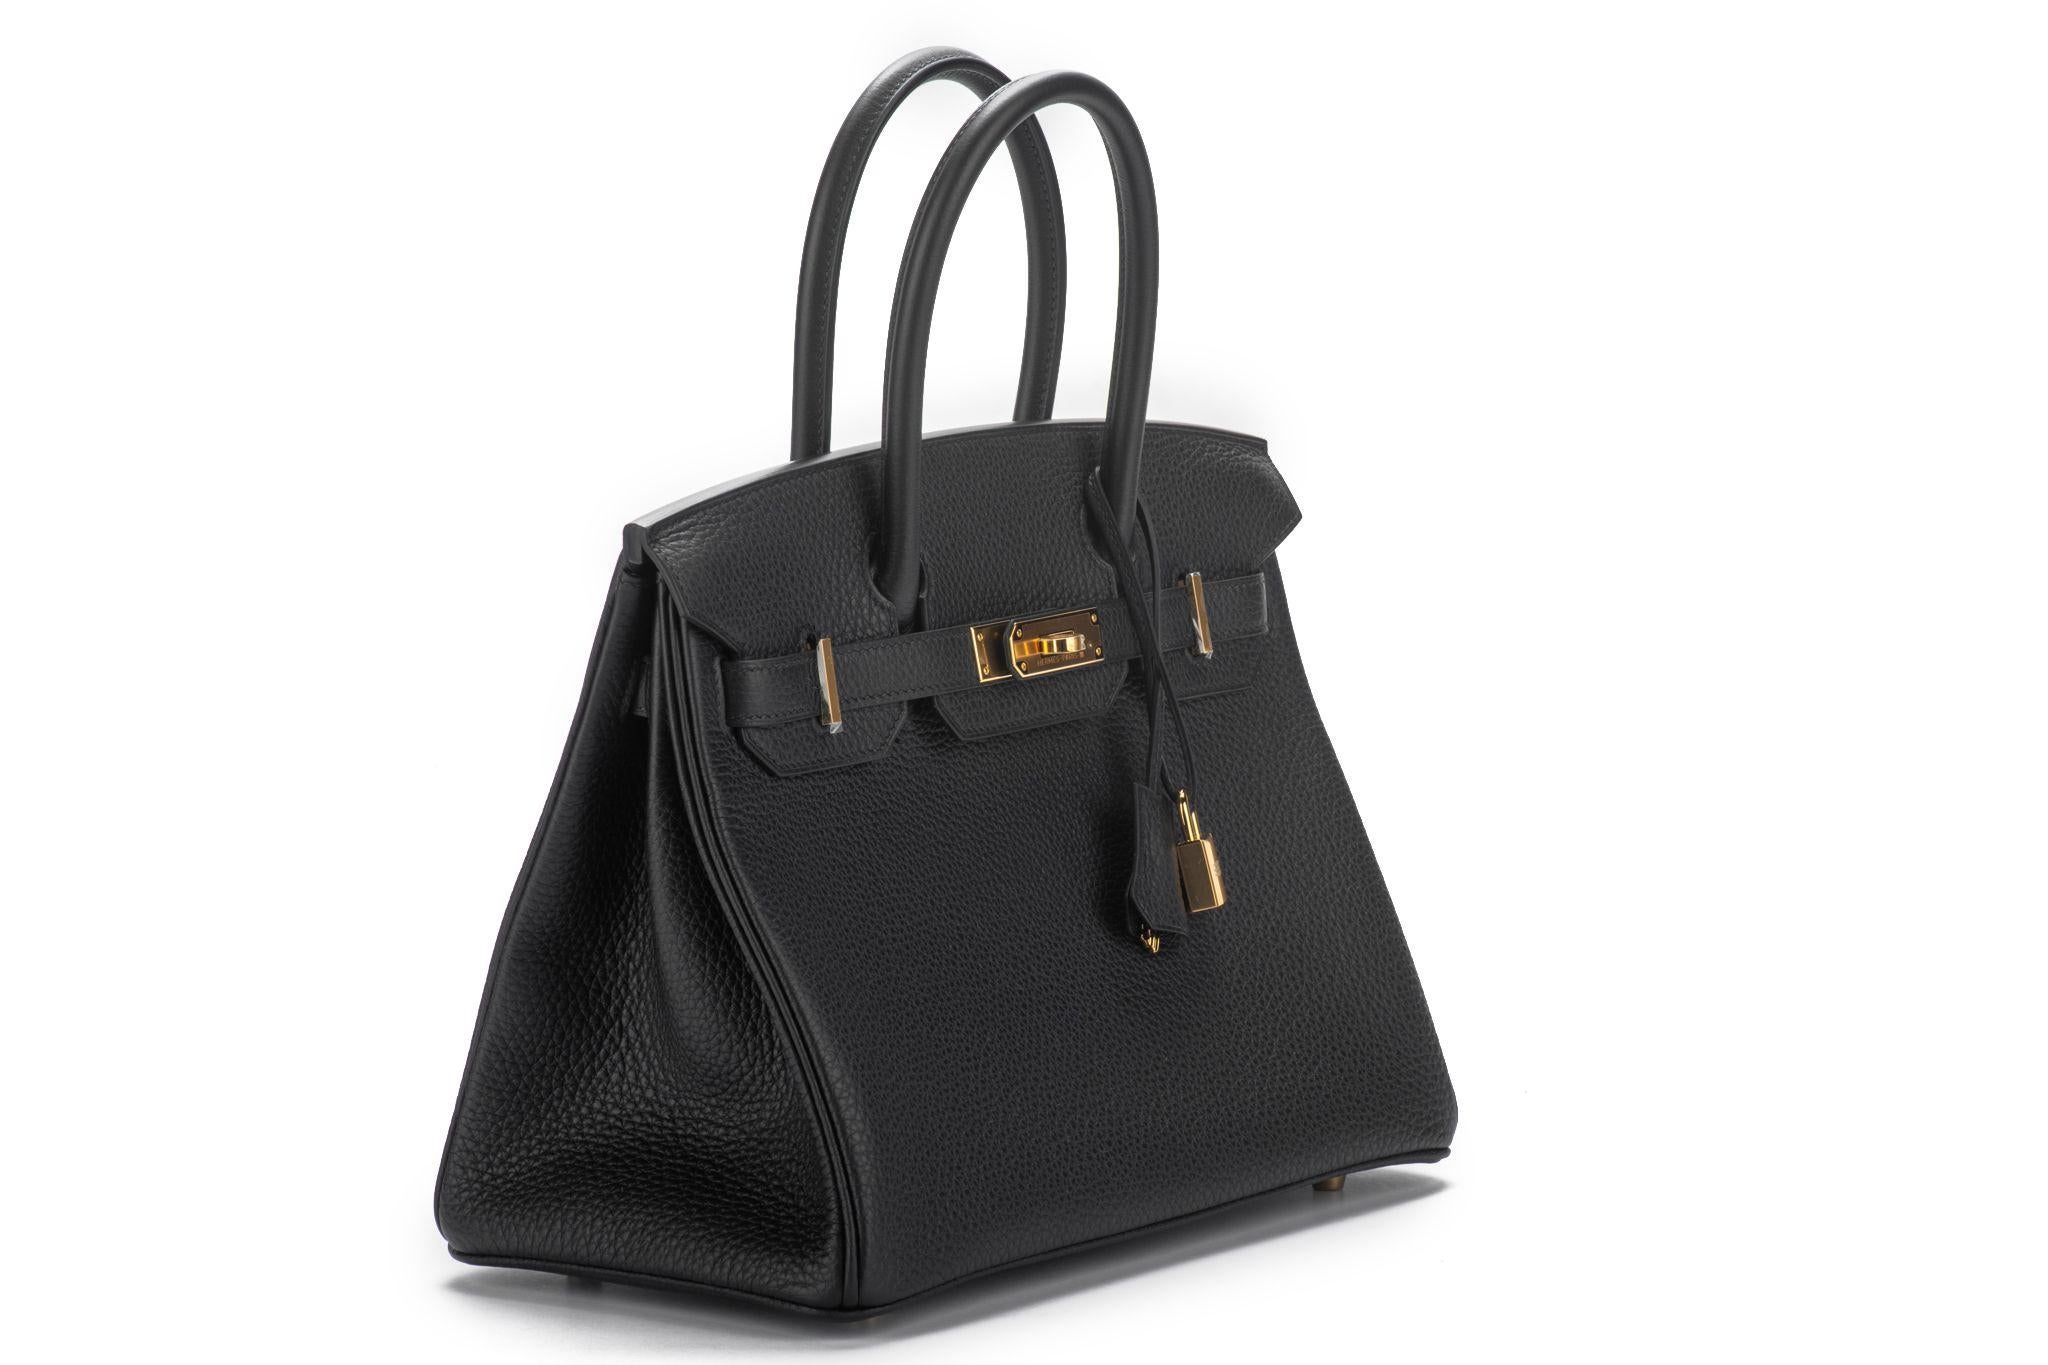 Hermès 30cm Birkin in black togo leather with gold tone hardware. Handle drop, 3.75